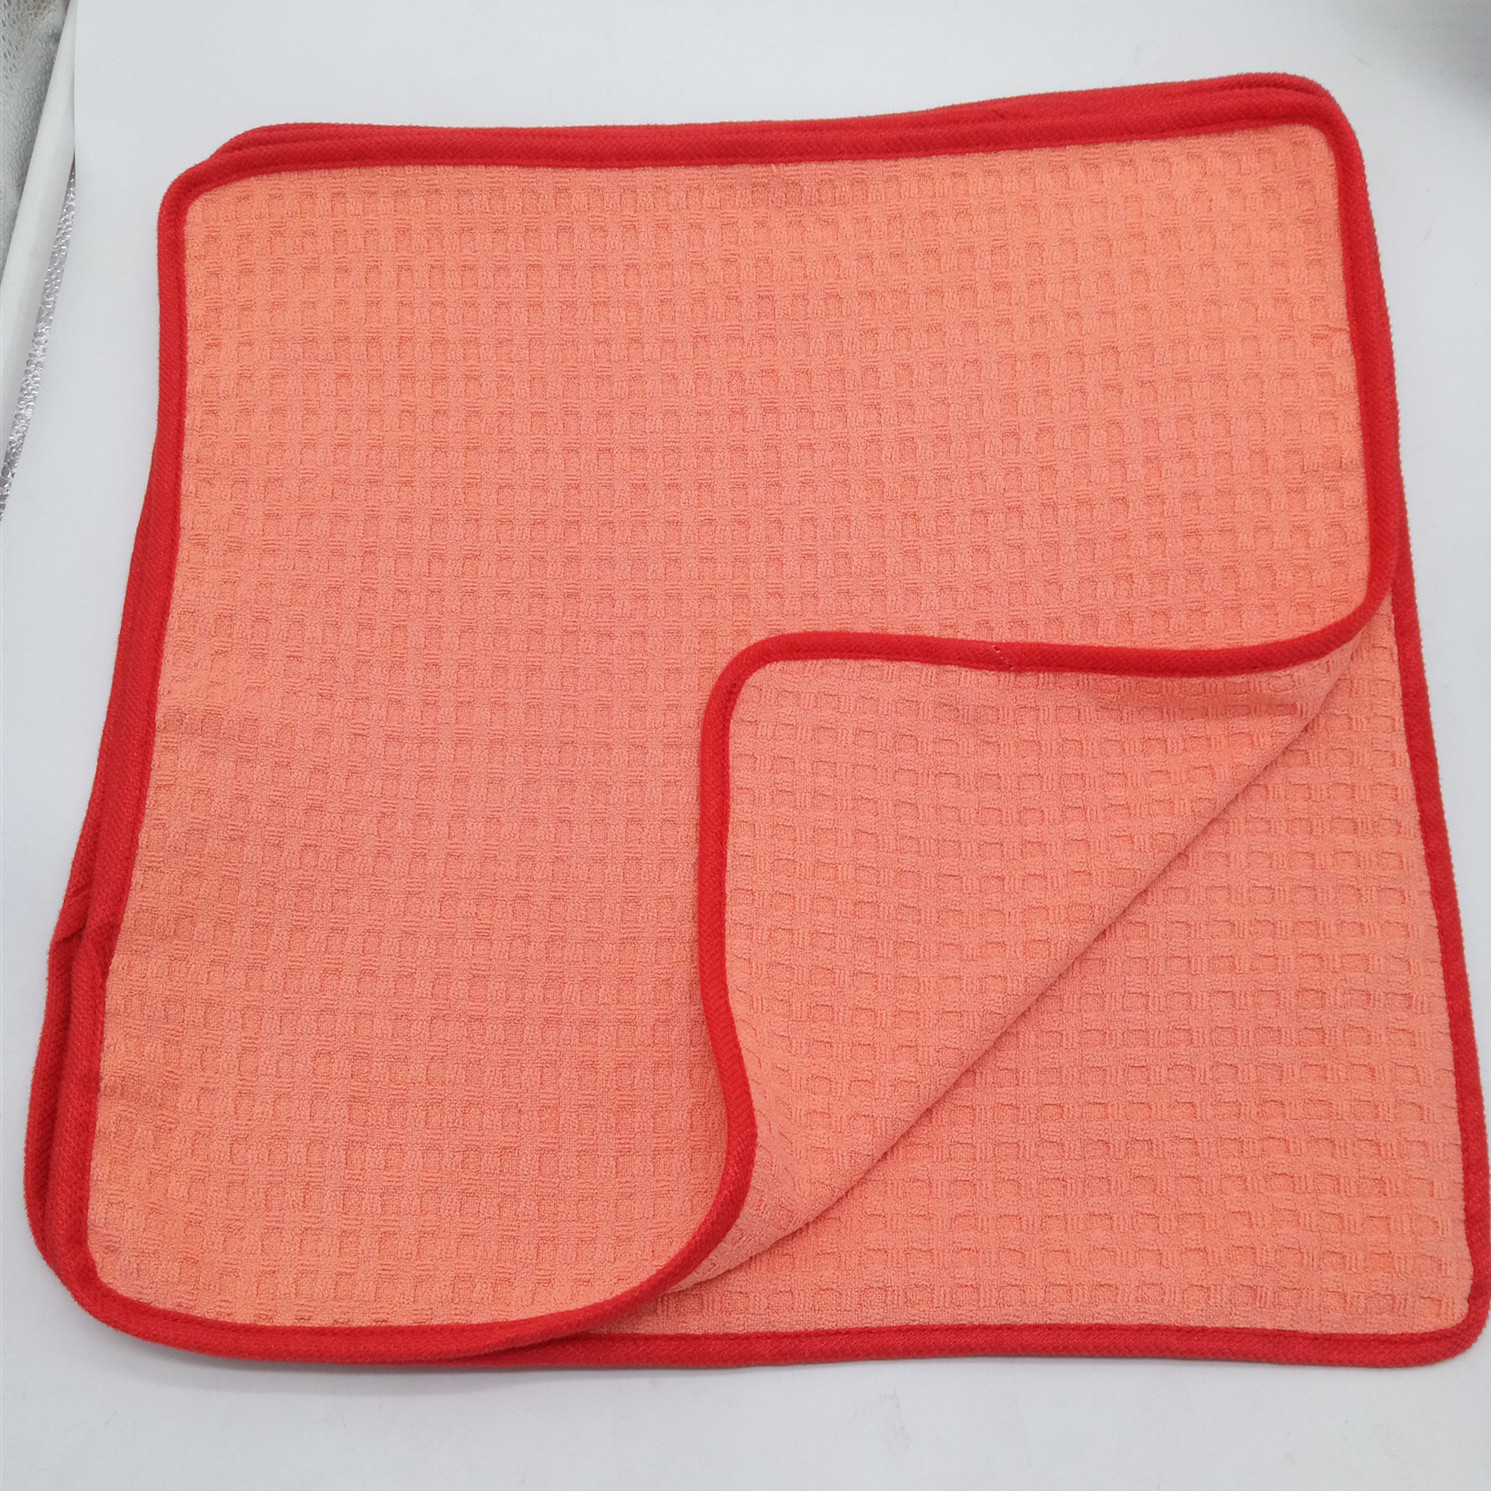 microfiber waffle weave towel Featured Image